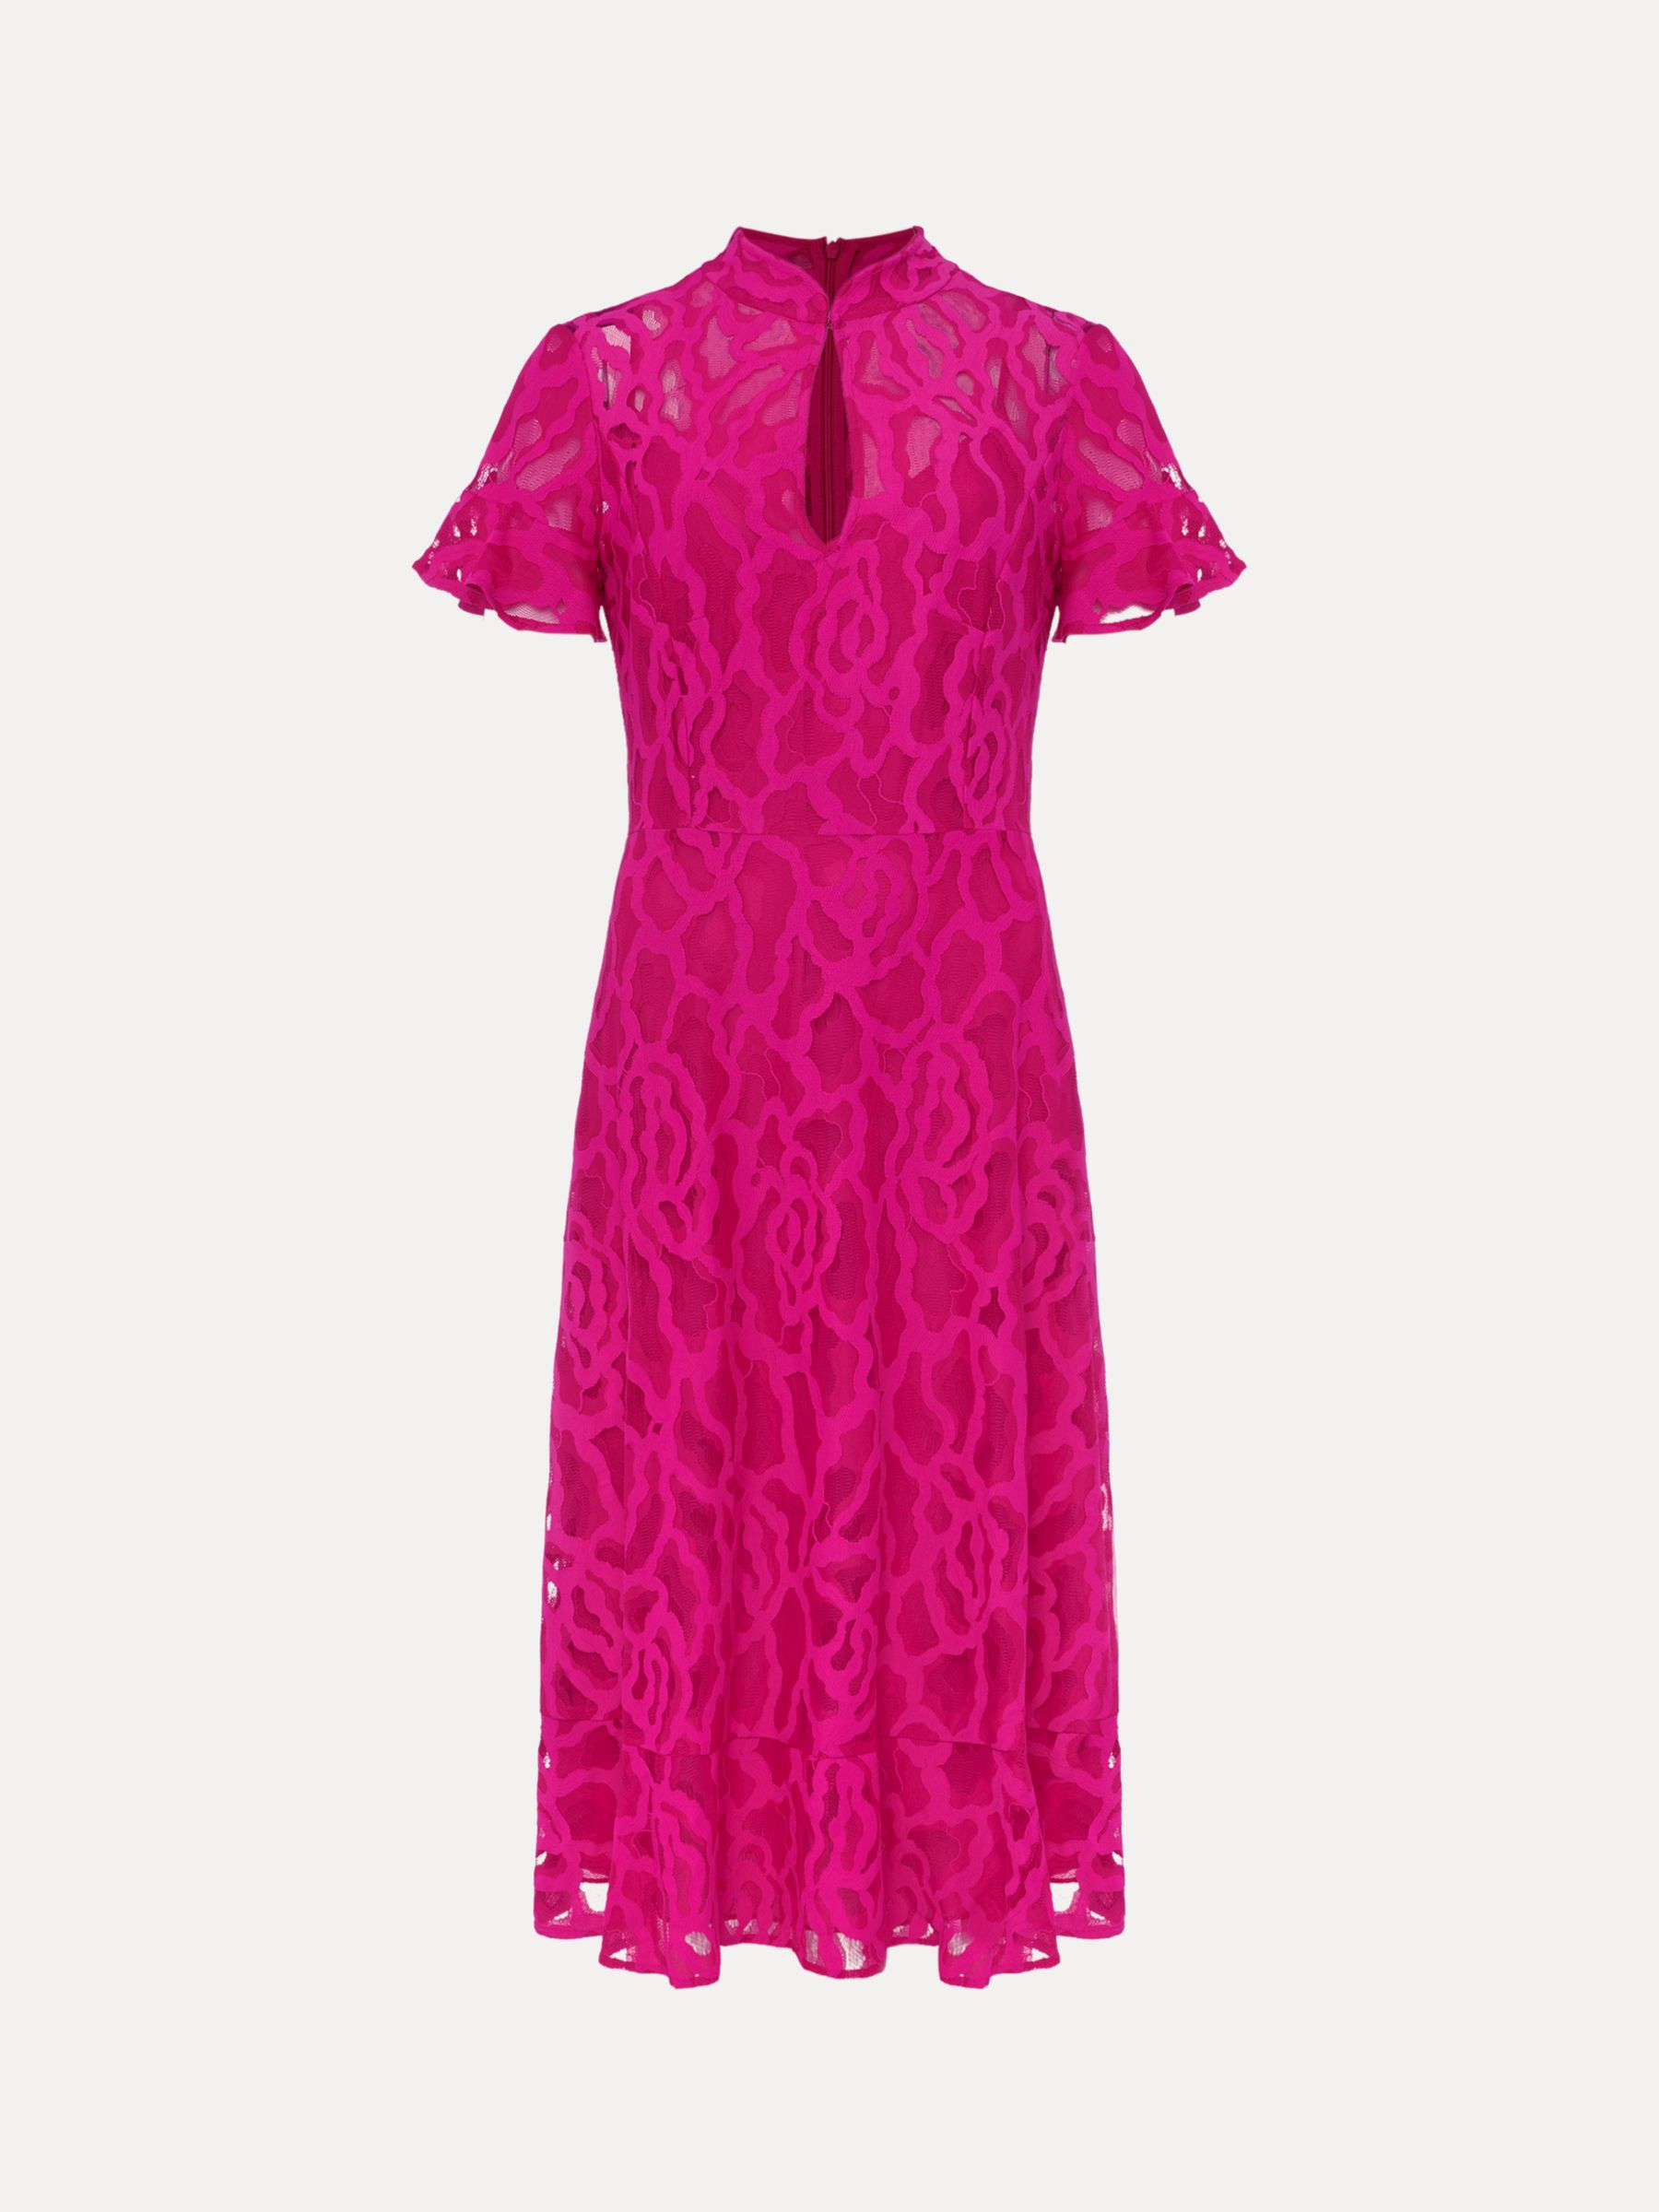 Phase Eight Lulu Lace Dress, Magenta Pink, 6